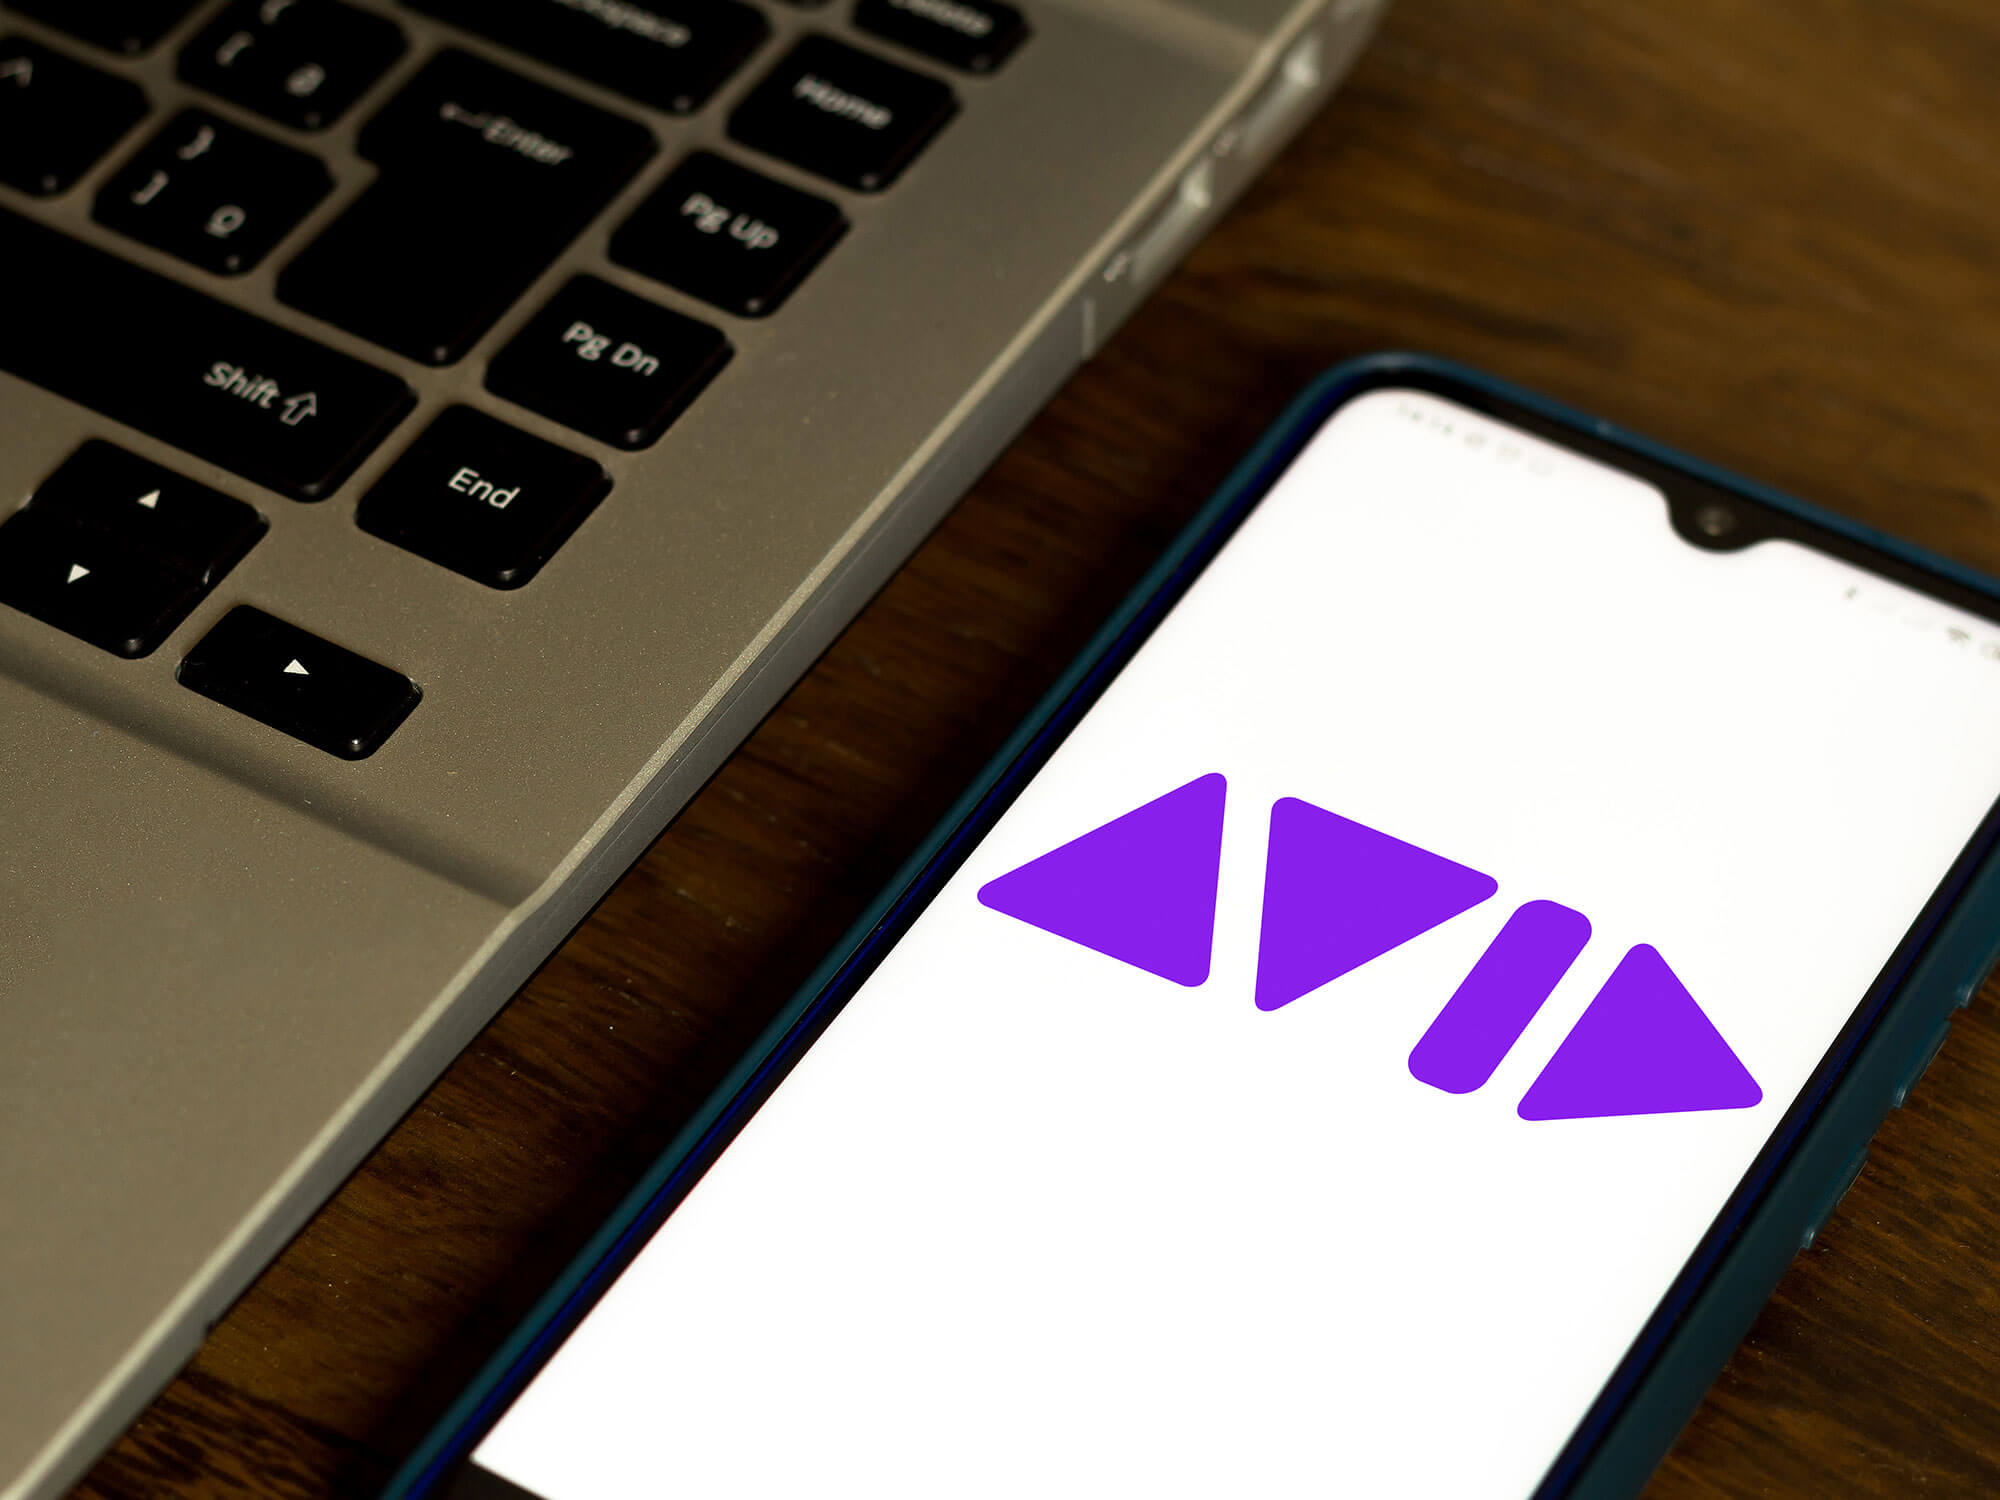 Avid logo on a smartphone